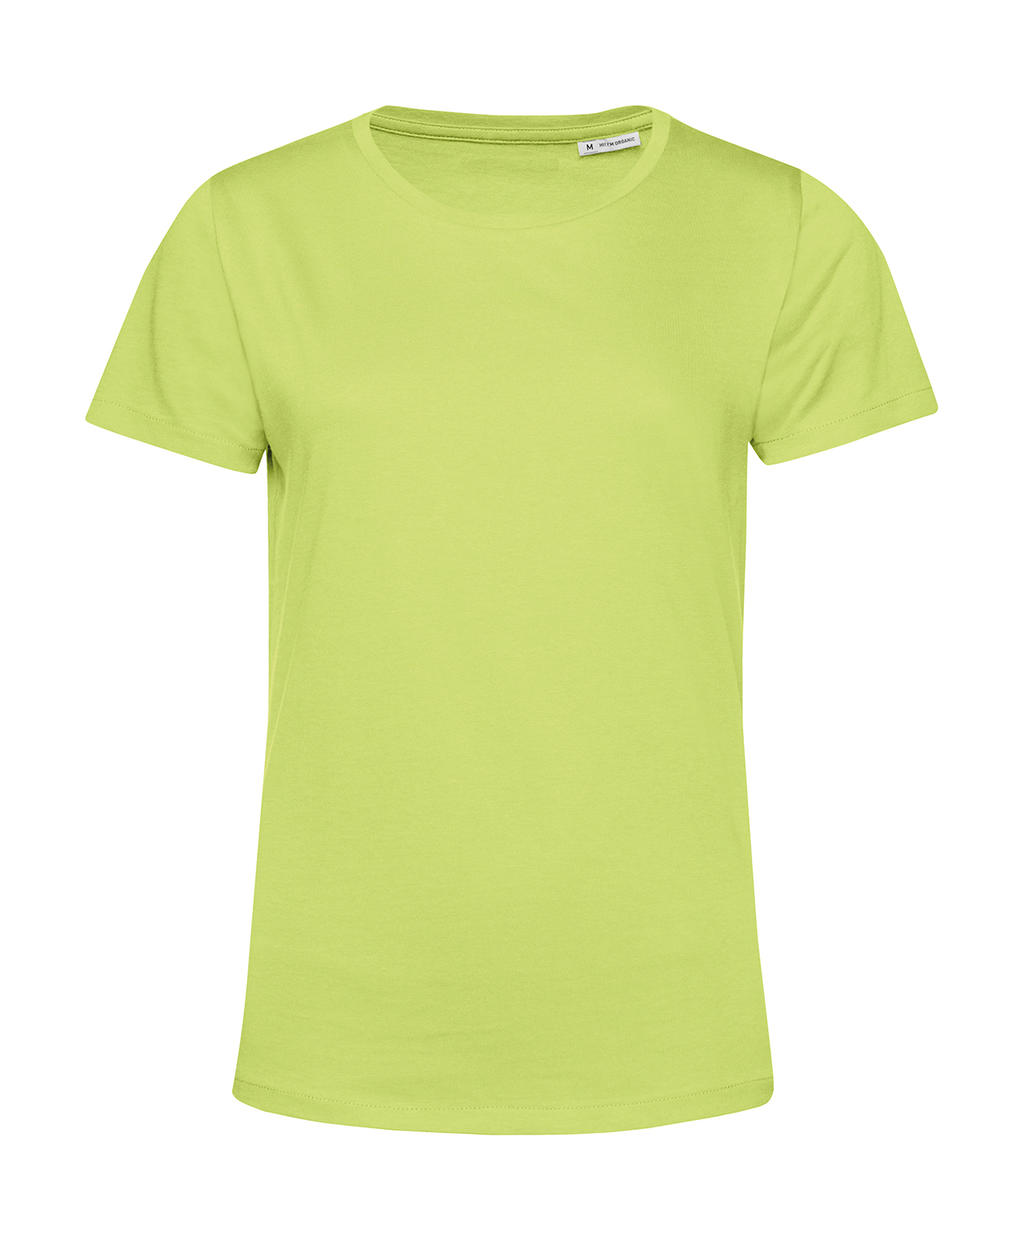 Tričko dámské BC Organic Inspire E150 - světle zelené, XL